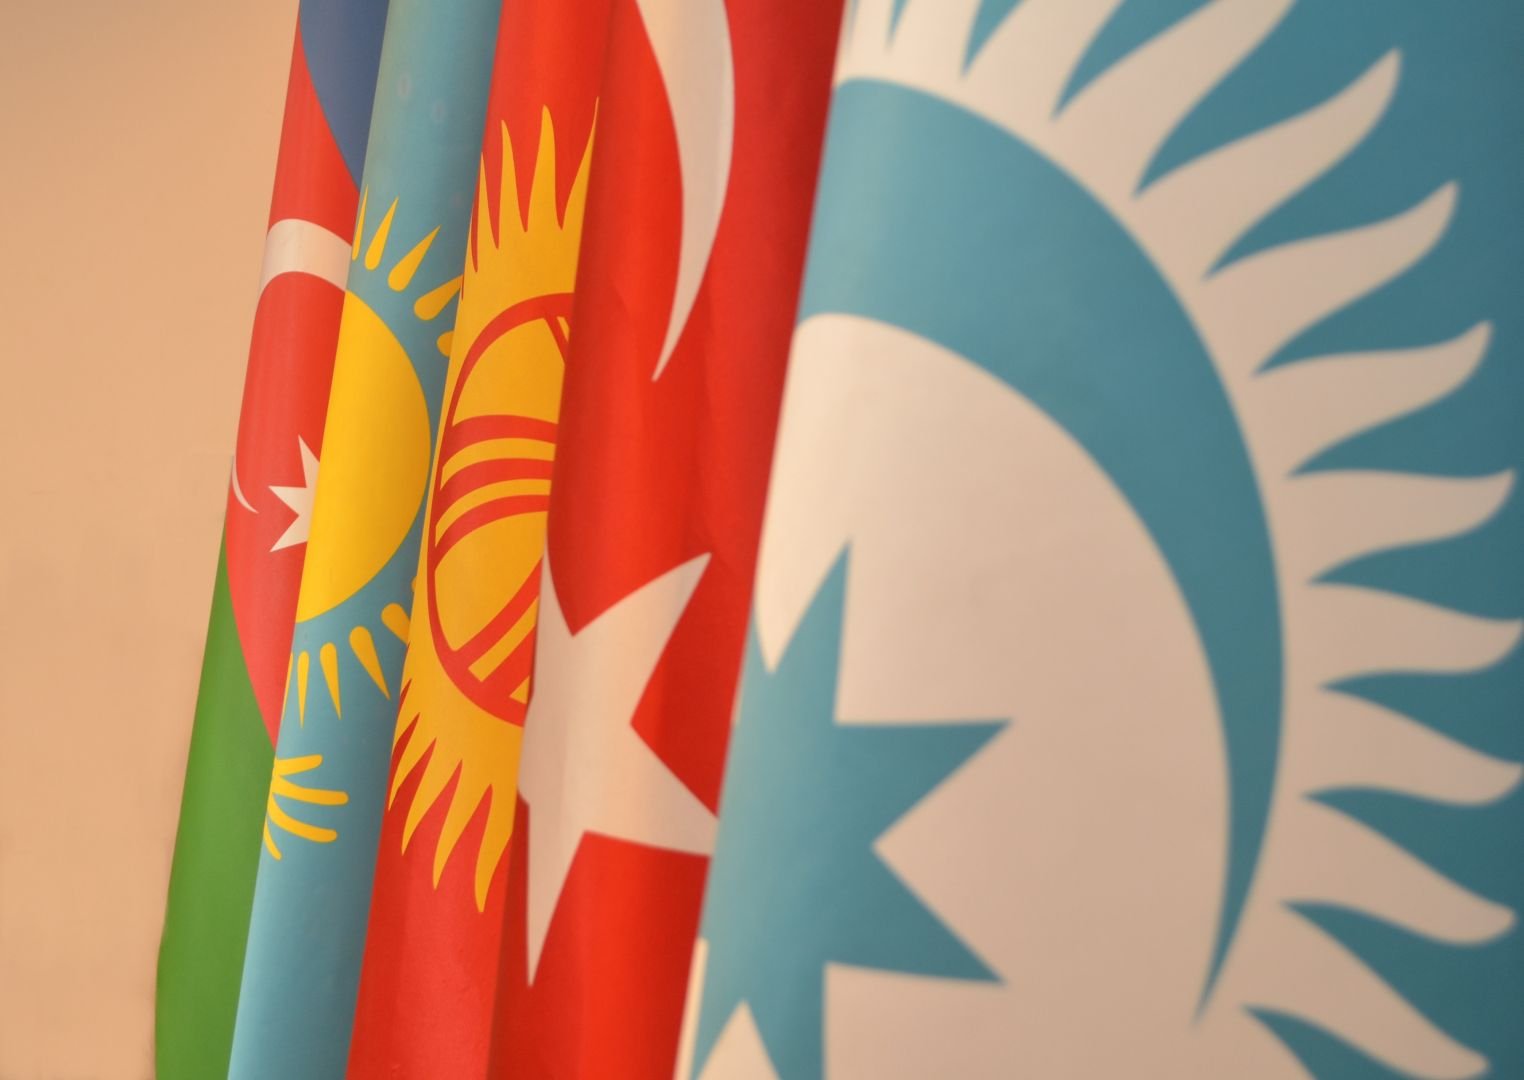 Organization of Turkic States plans to hold informal summit in Azerbaijan